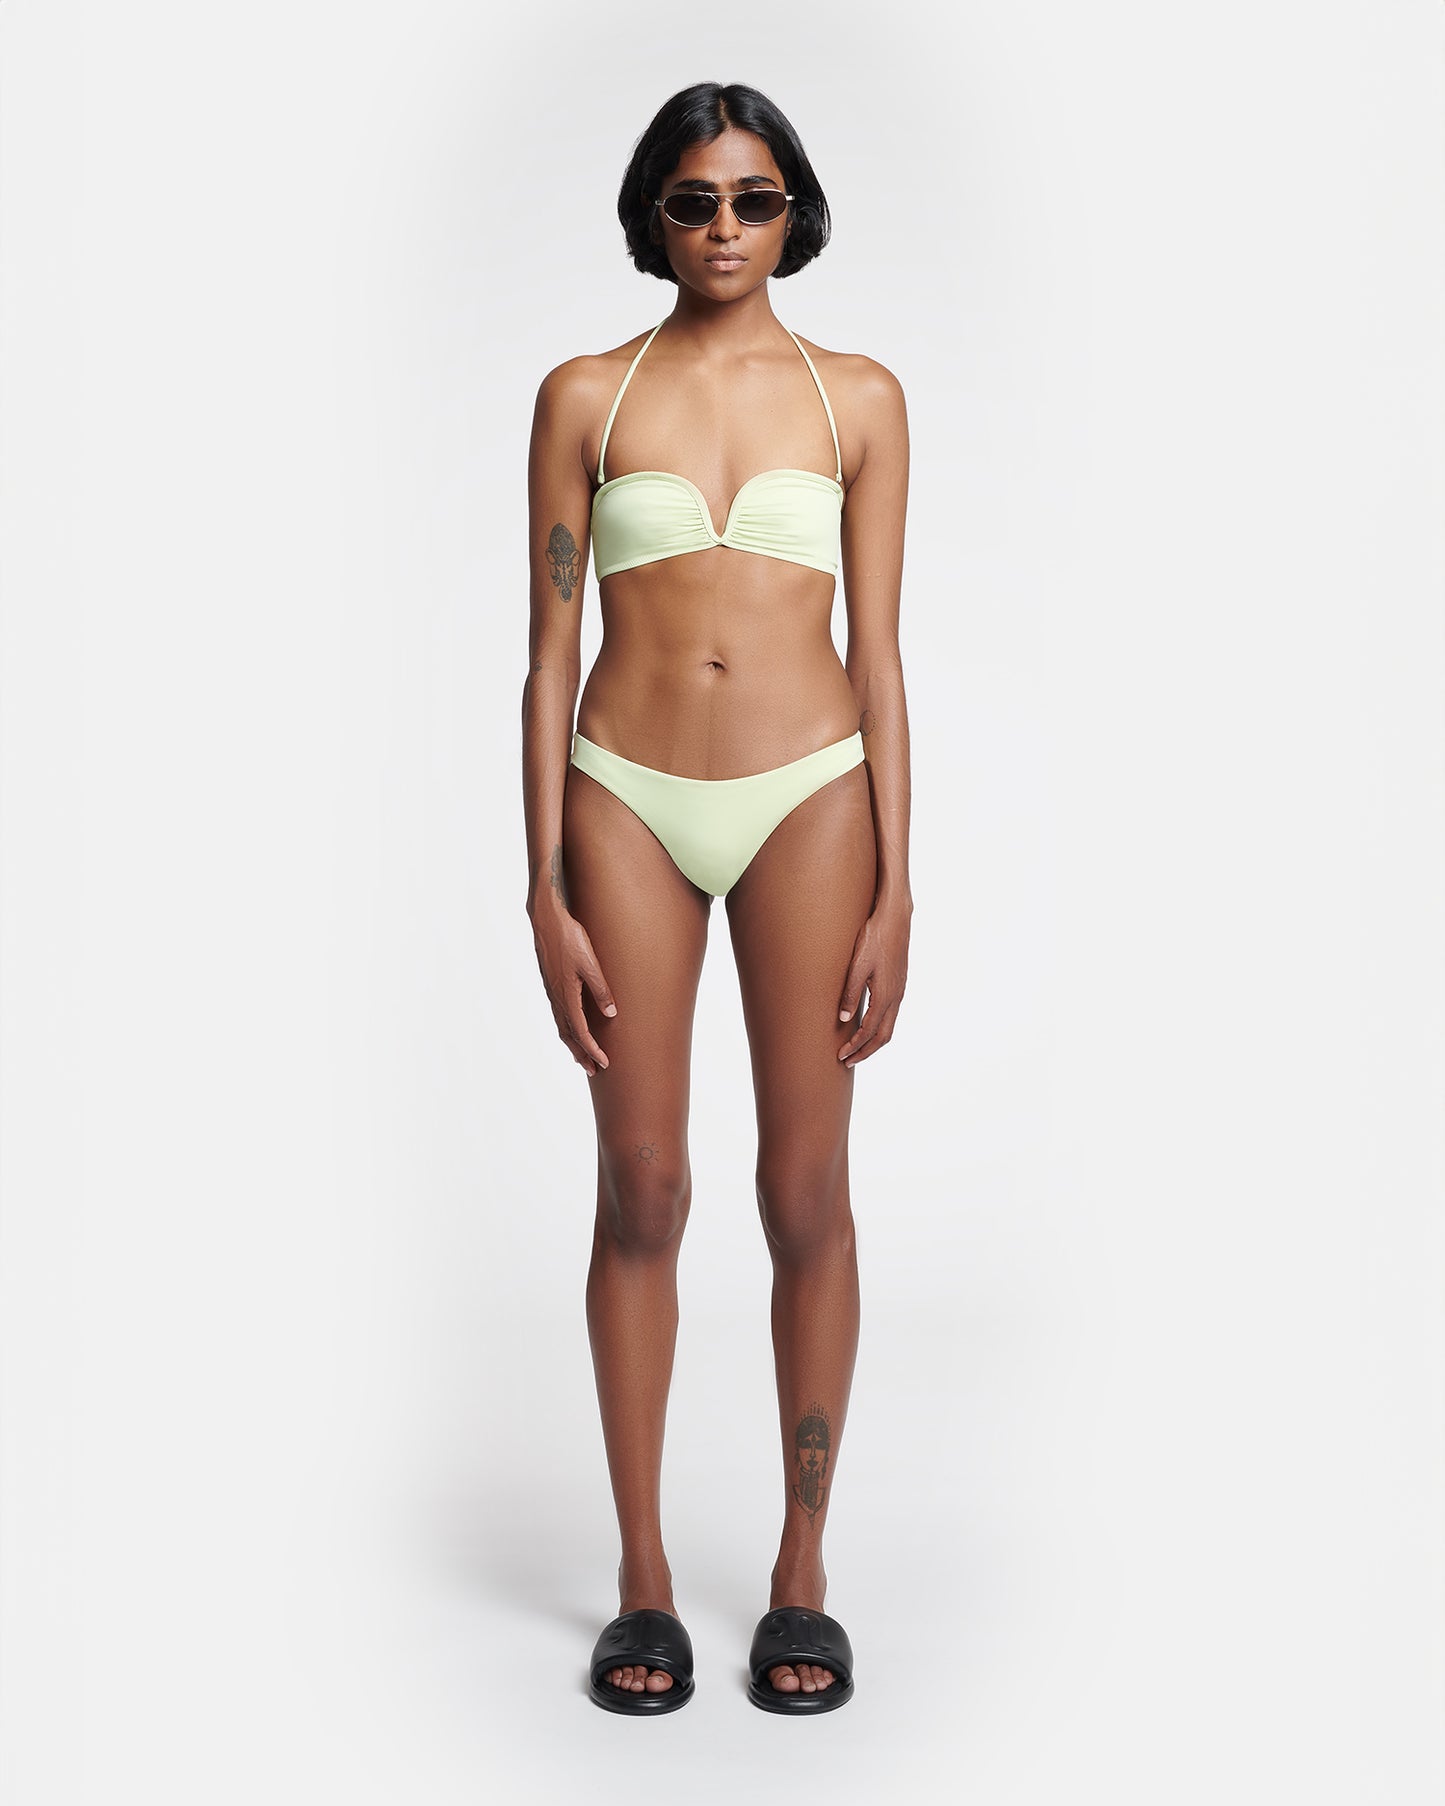 Manou - Ruched Halterneck Bikini Top - Shadow Lime